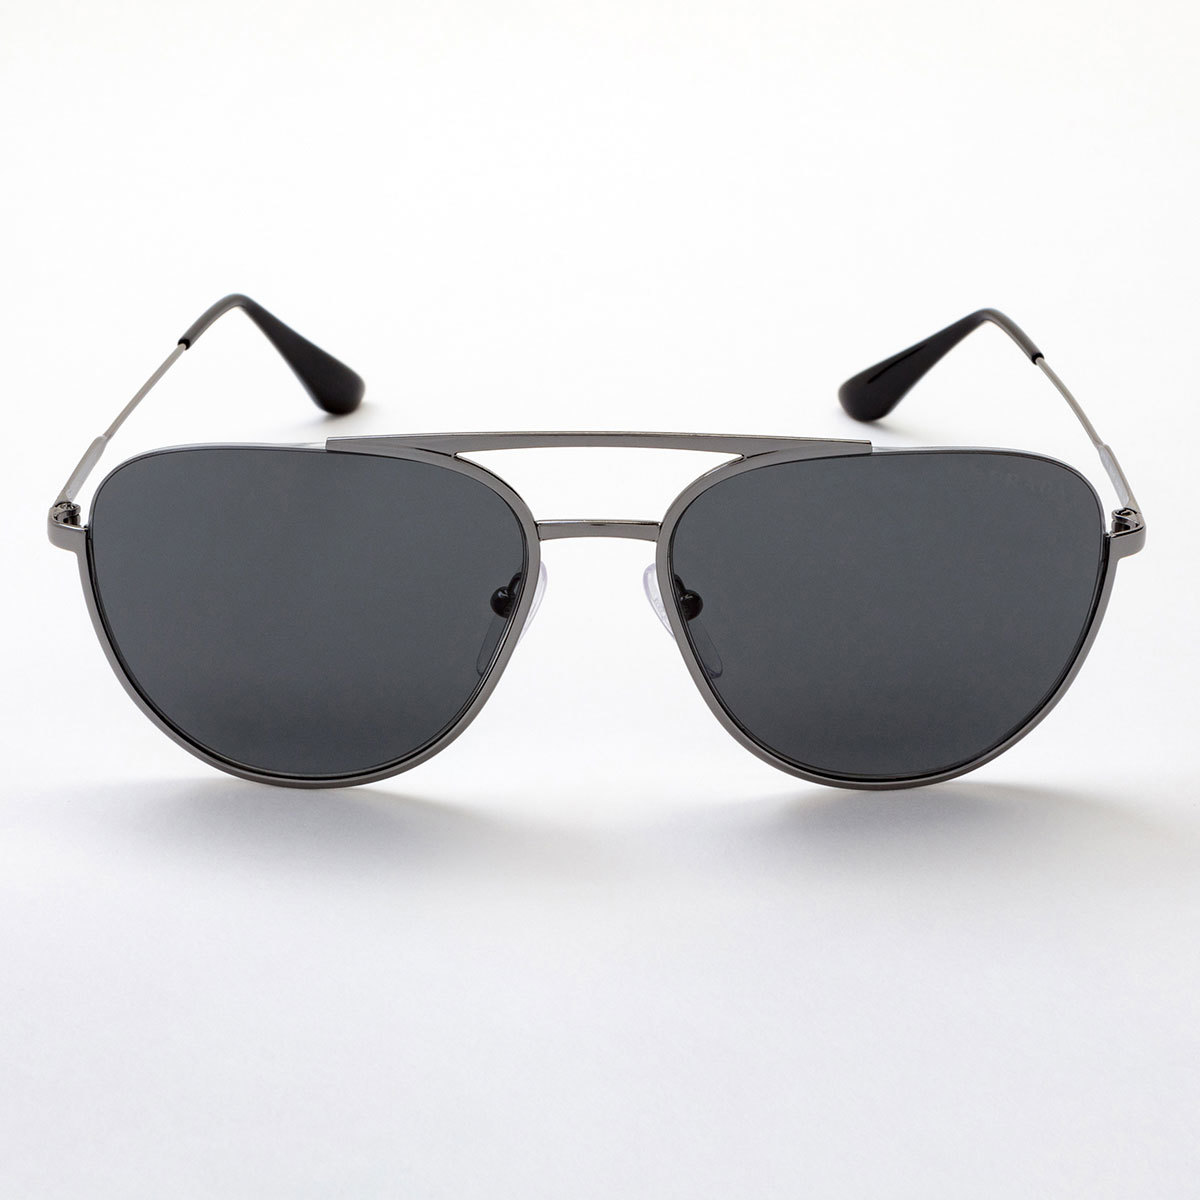 Prada Shiny Gunmetal Sunglasses with Grey Lenses, 5OUS 5AV-5SO | Costco UK